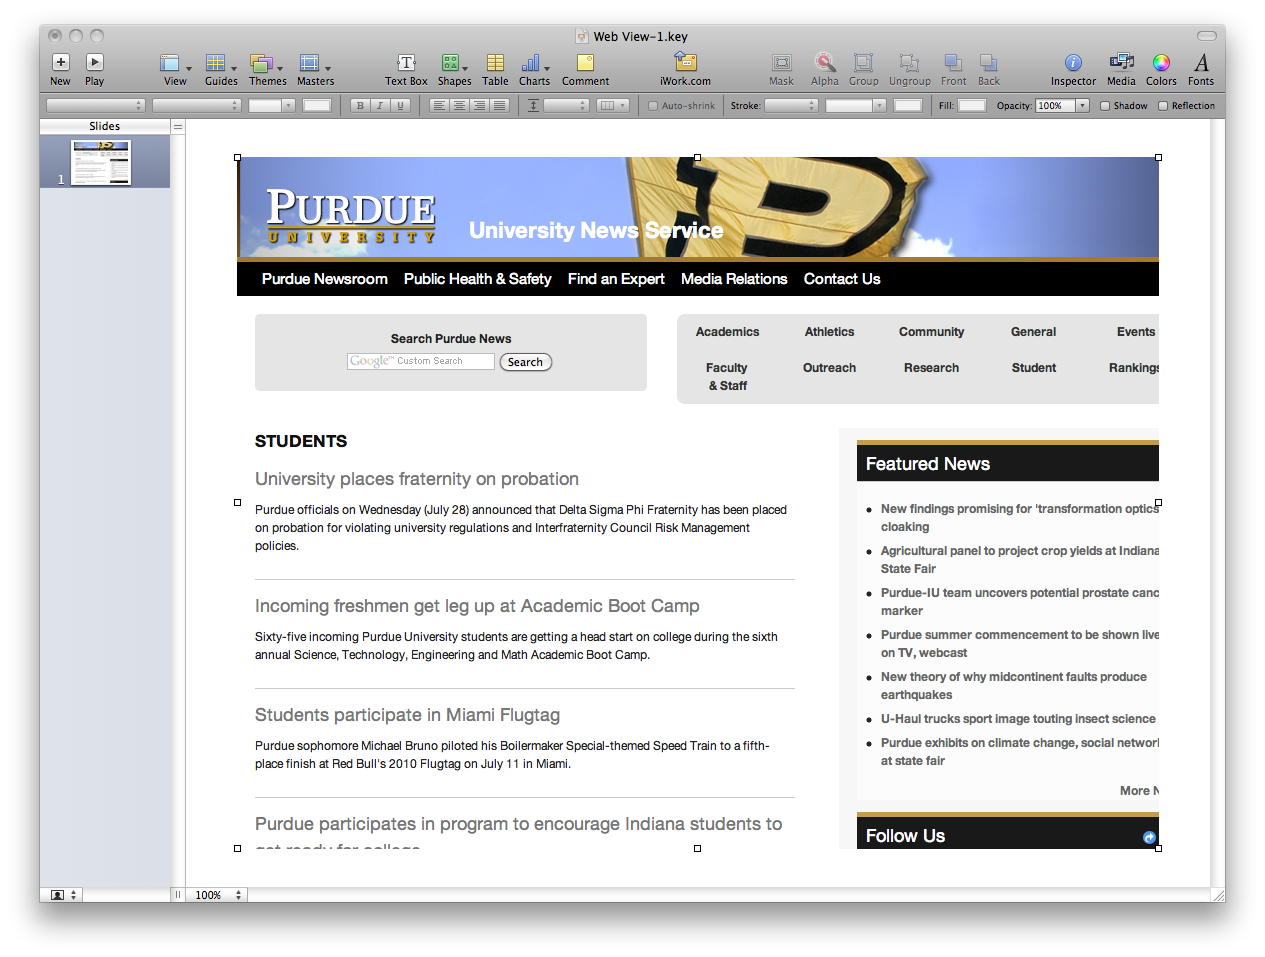 Purdue University News Services Homepage